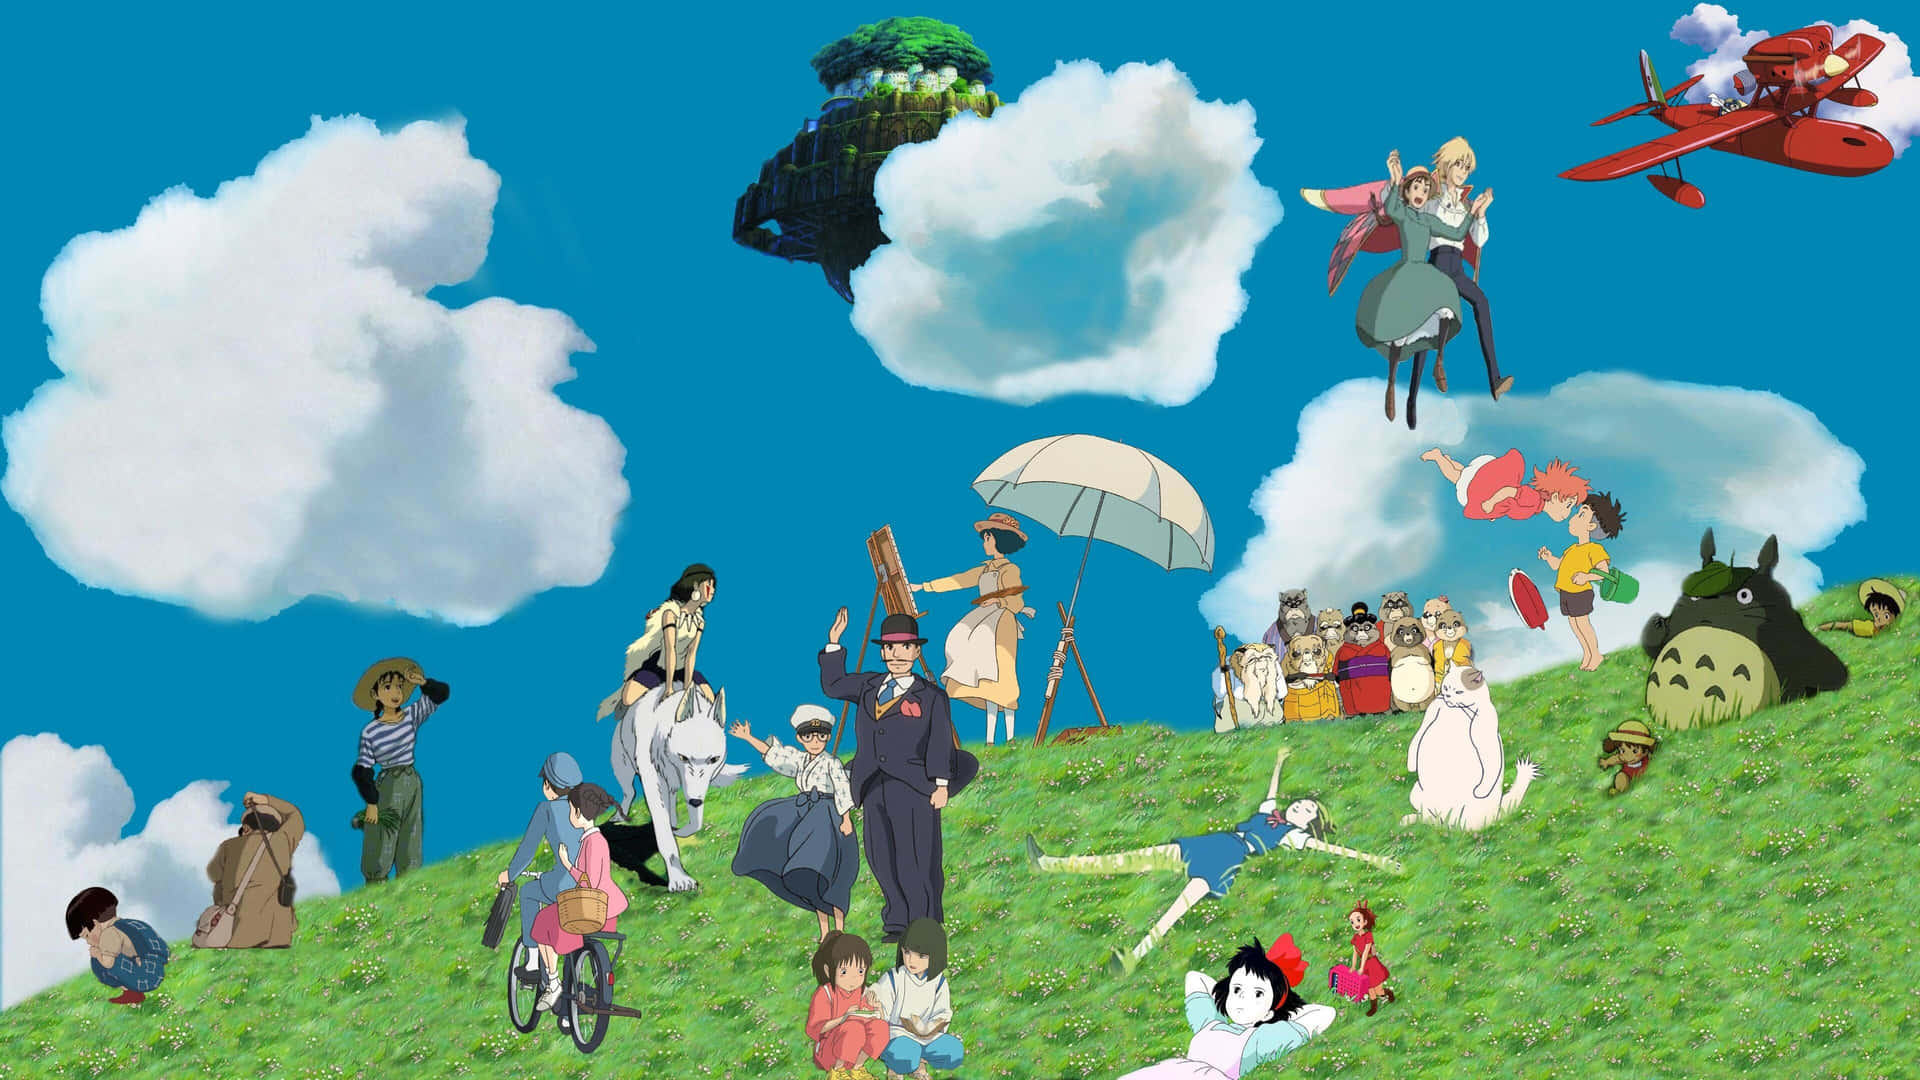 Enchanting Studio Ghibli Magical Landscape